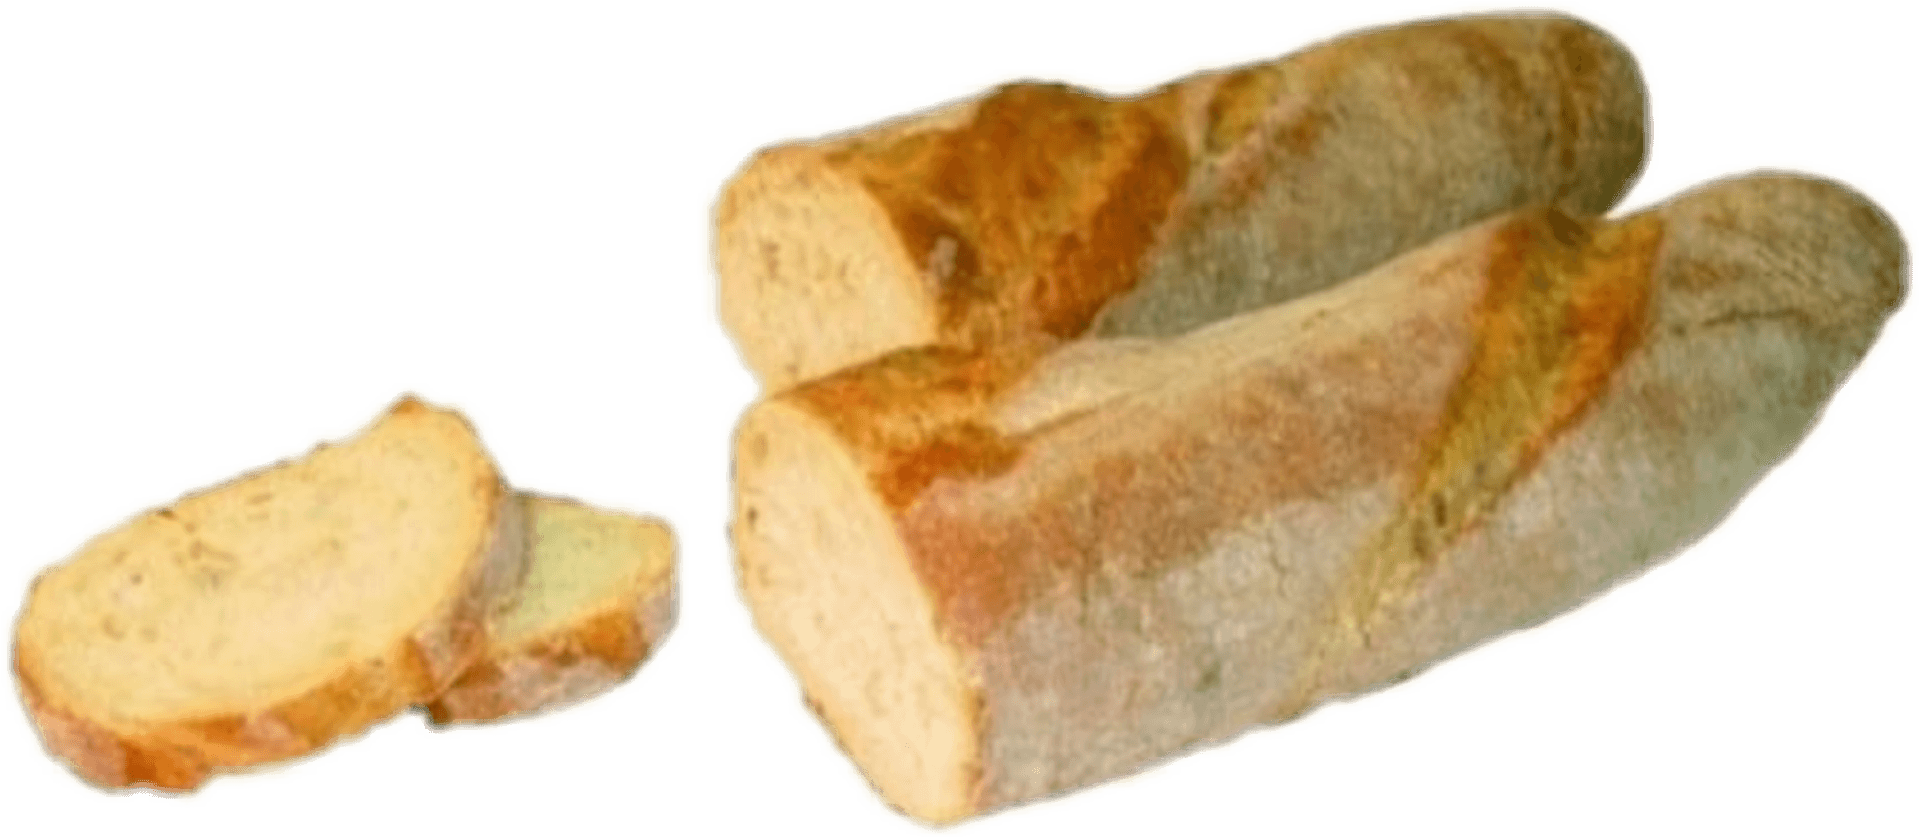 Fresh Baguetteand Slices.png PNG image